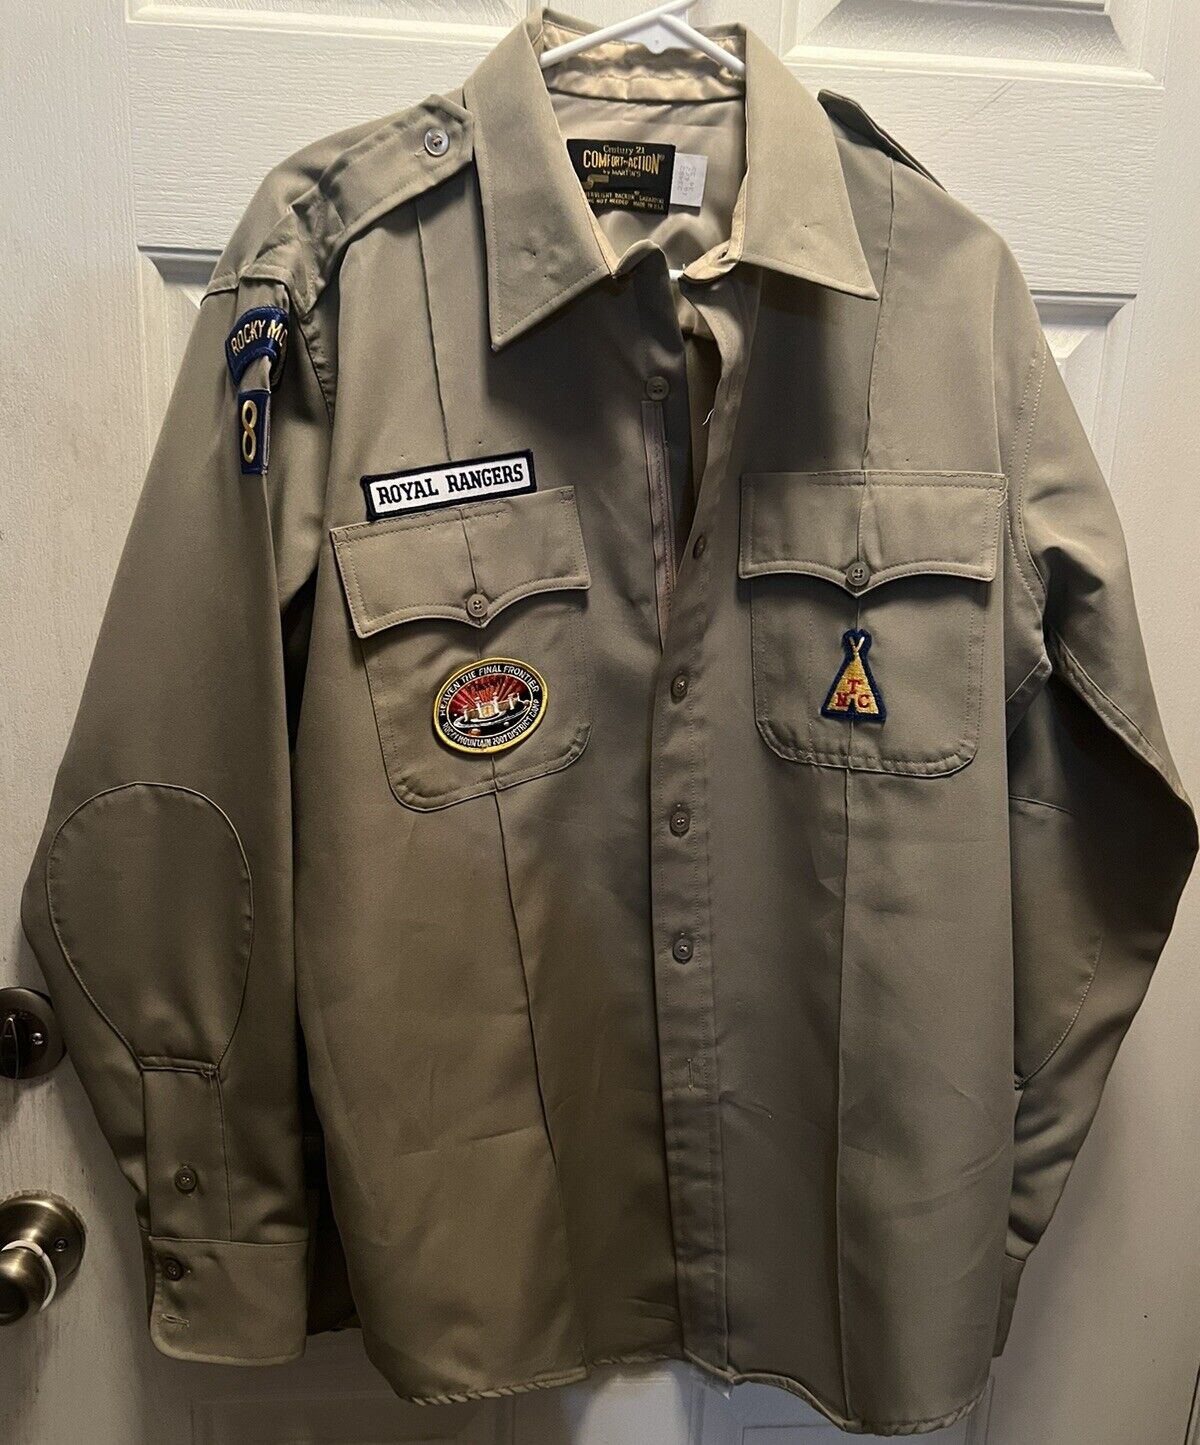  Royal Rangers Uniform Shirt Rocky Mountain 16 1/2 x 34/35